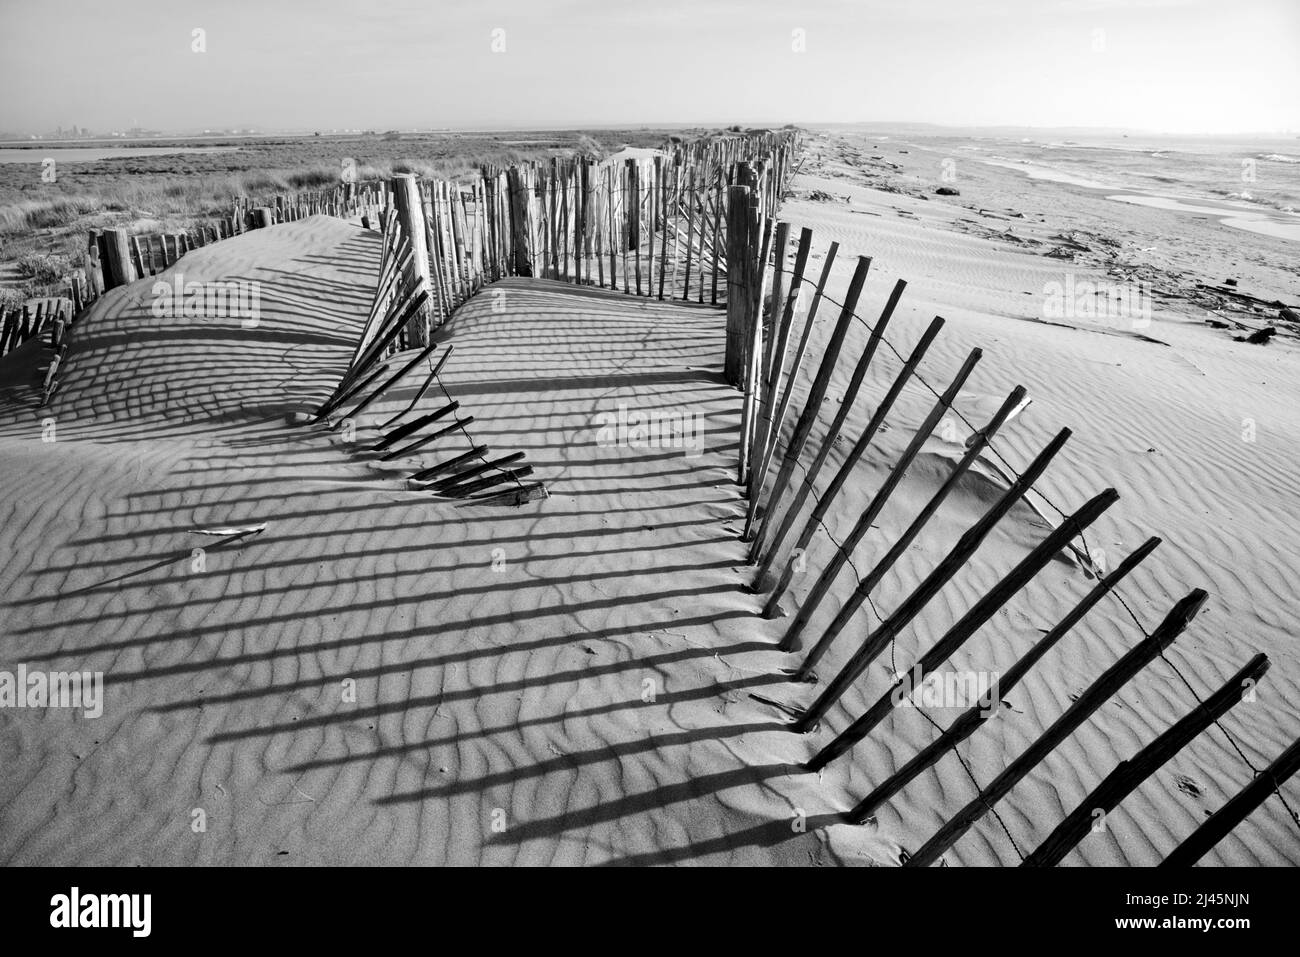 Wooden Fences Limiting Access to & Coastal Erosion of Sand Dunes at Napoleon Beach, or Plage Napoleon, Port St Louis du Rhône Camargue Provence France Stock Photo